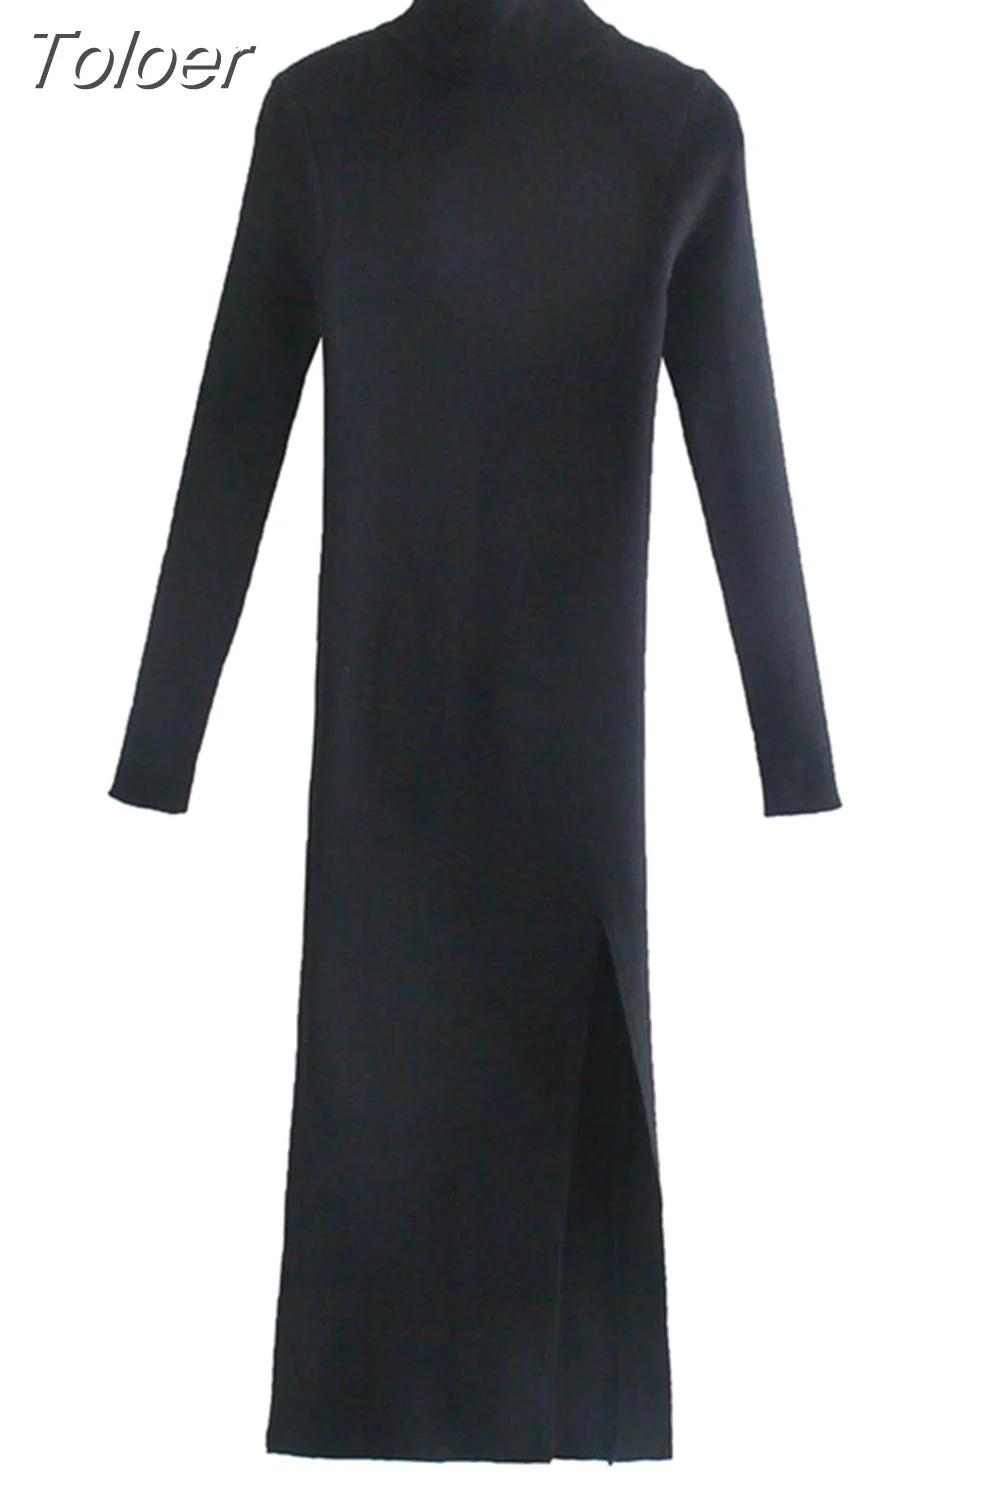 Toloer MODA 2023 Women Chic Fashion Front Slit Sheath Knit Midi Dress Vintage High Neck Long Sleeve Female Dresses Vestidos Mujer